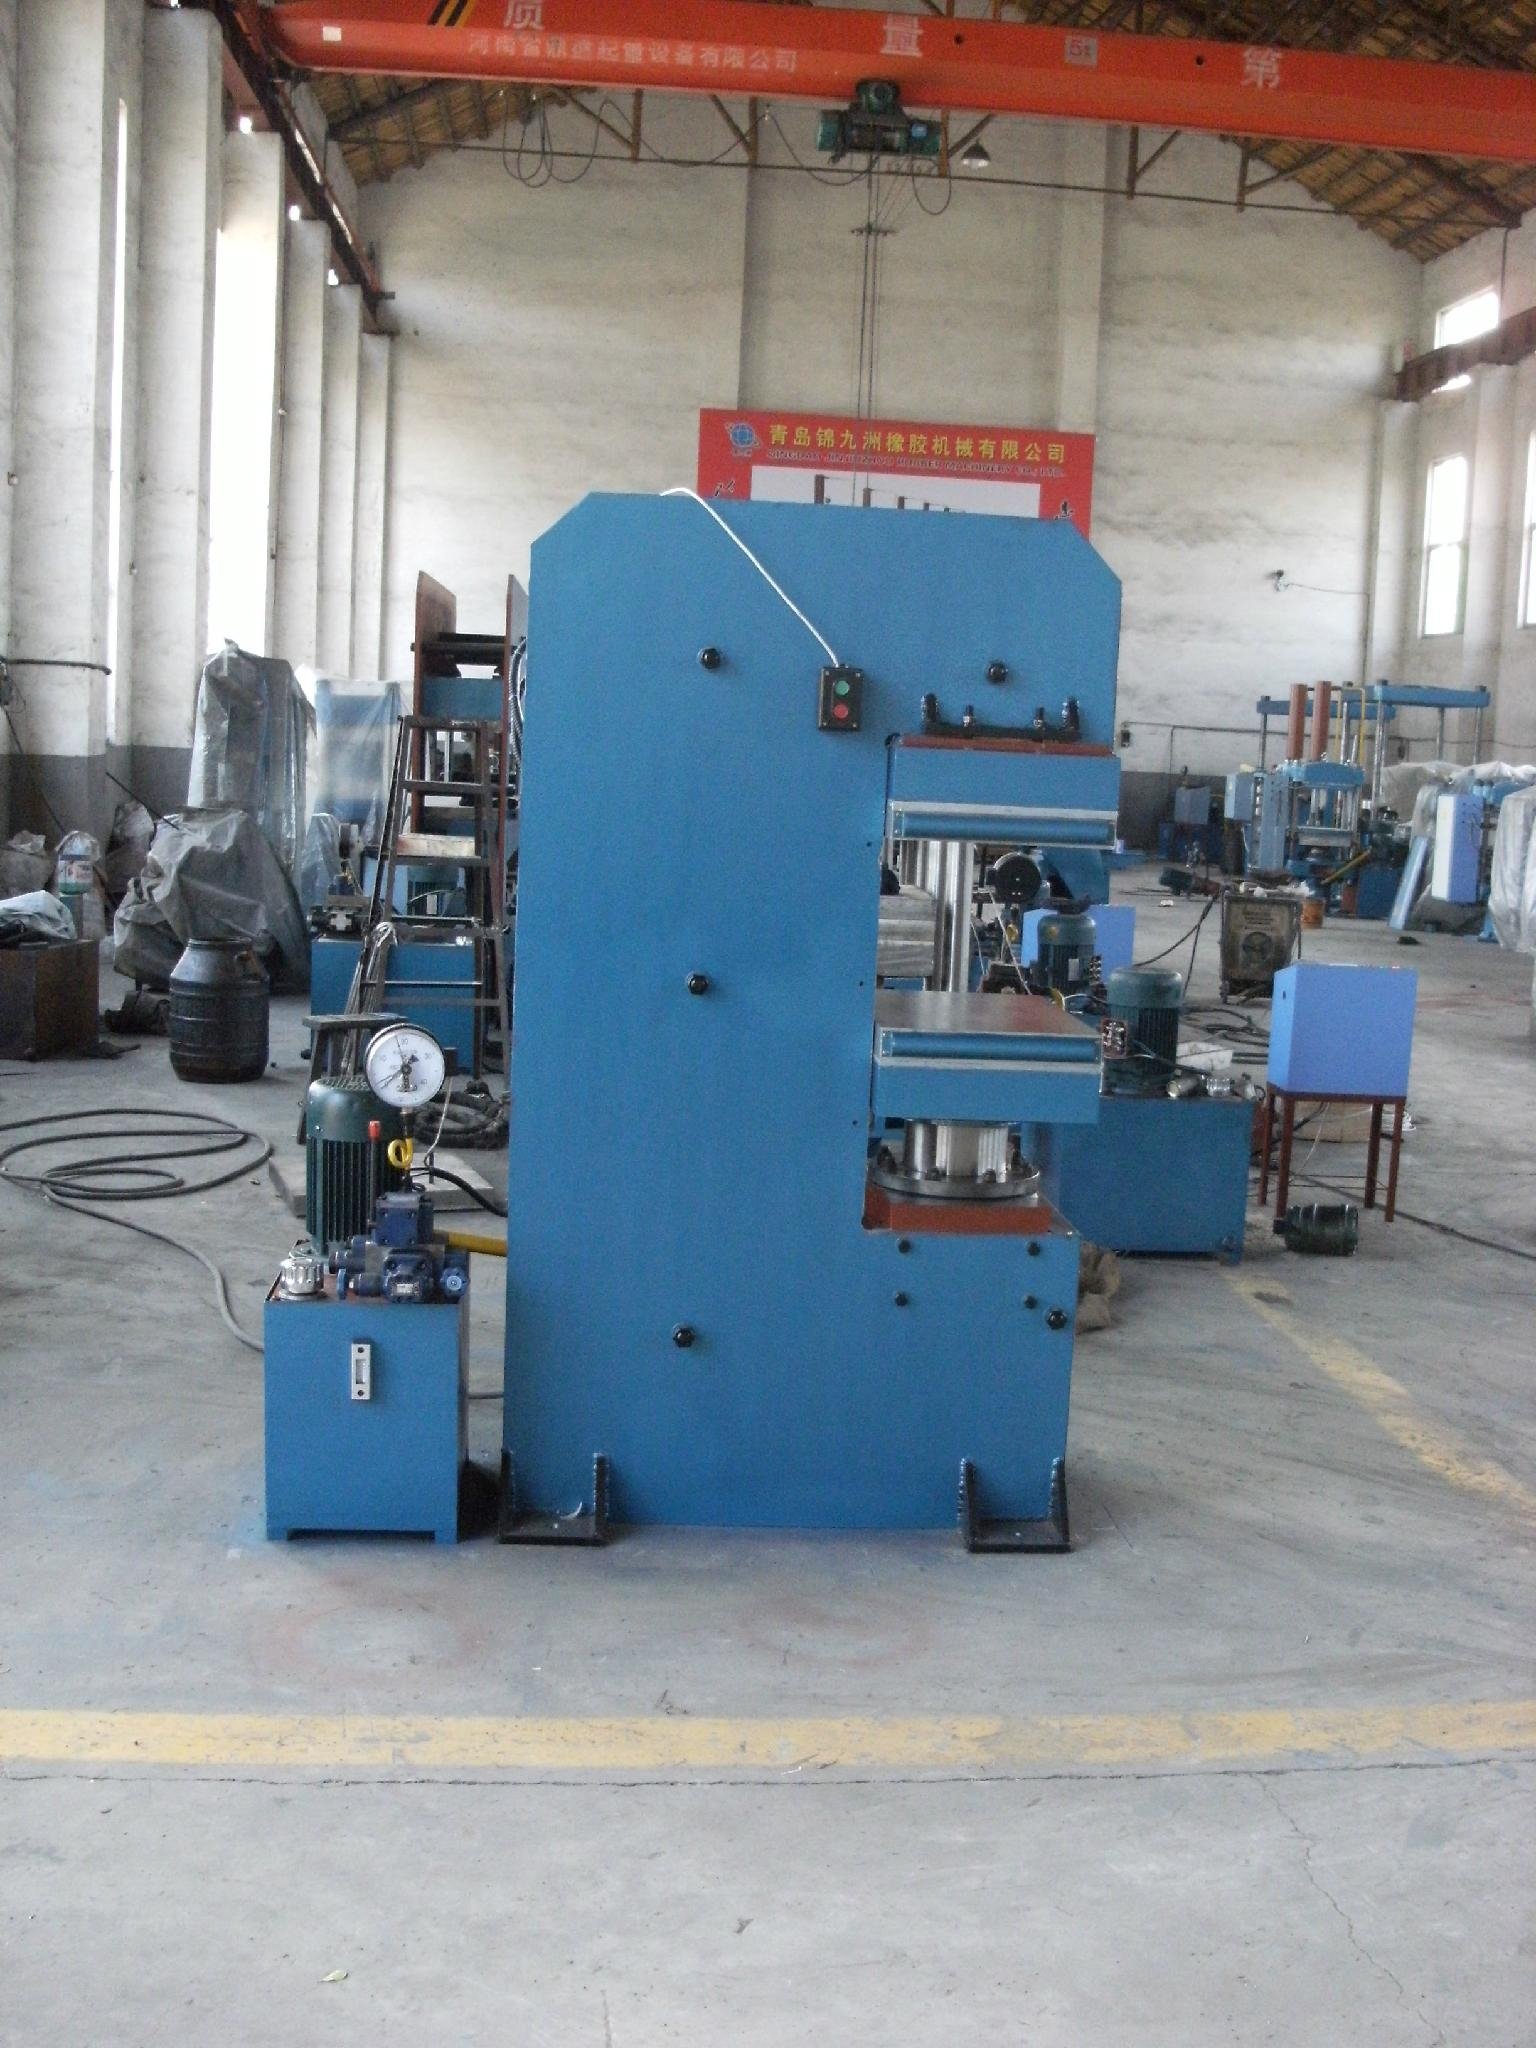 100T rubber hydraulic press vulcanizing machine in qingdao price negotiable 4